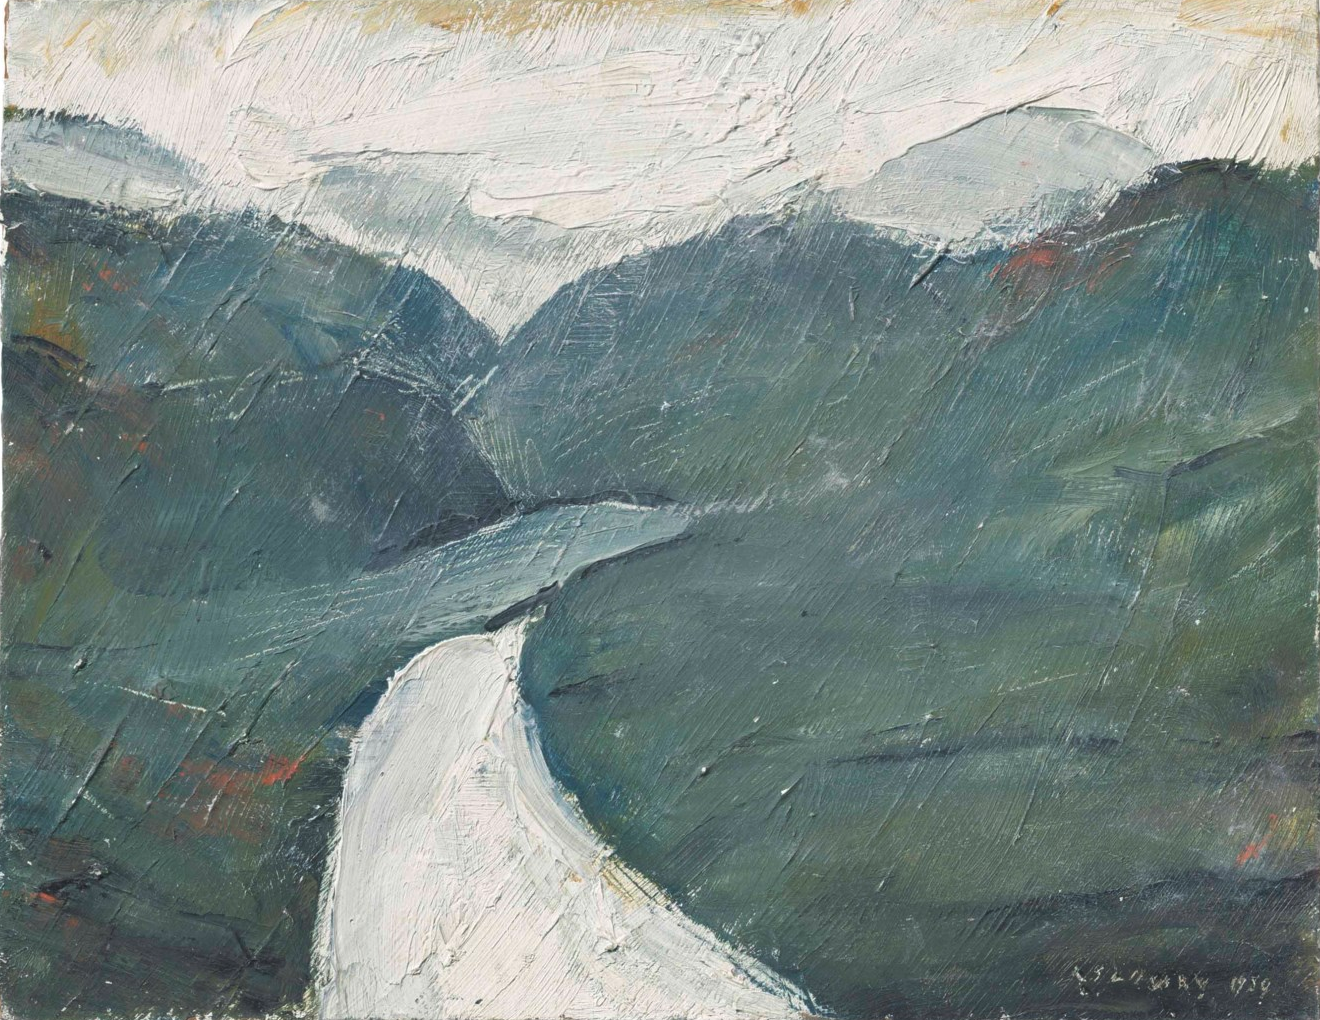 Glencoe (1959) by Laurence Stephen Lowry (1887 - 1976), English artist.